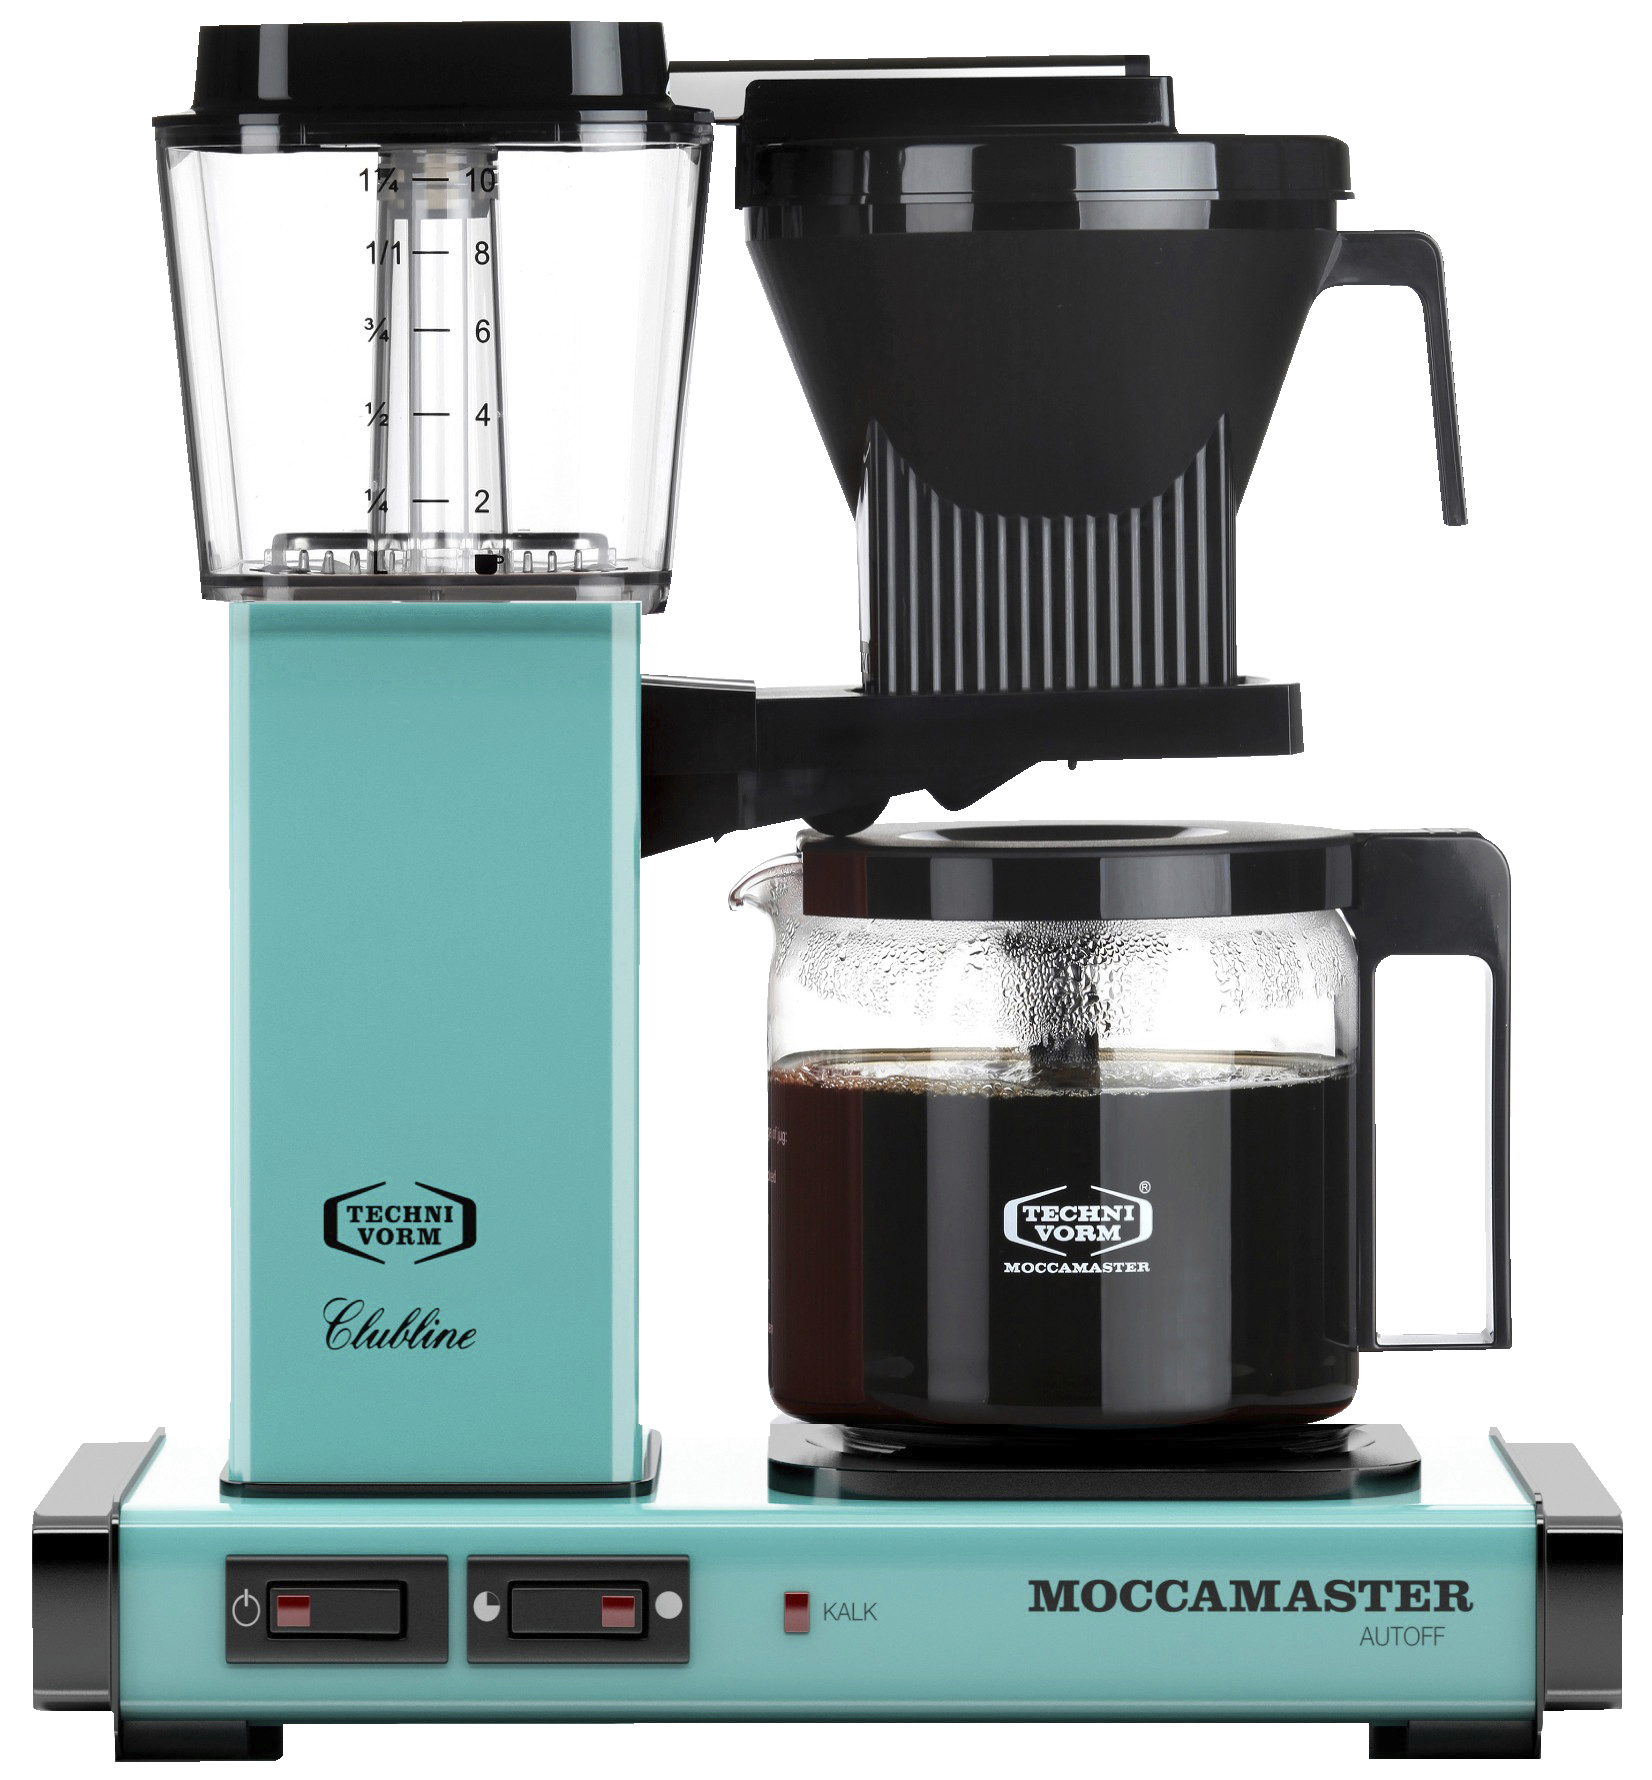 Moccamaster kaffemaskine KBGC 982 AO - turkis - Kaffemaskine ...